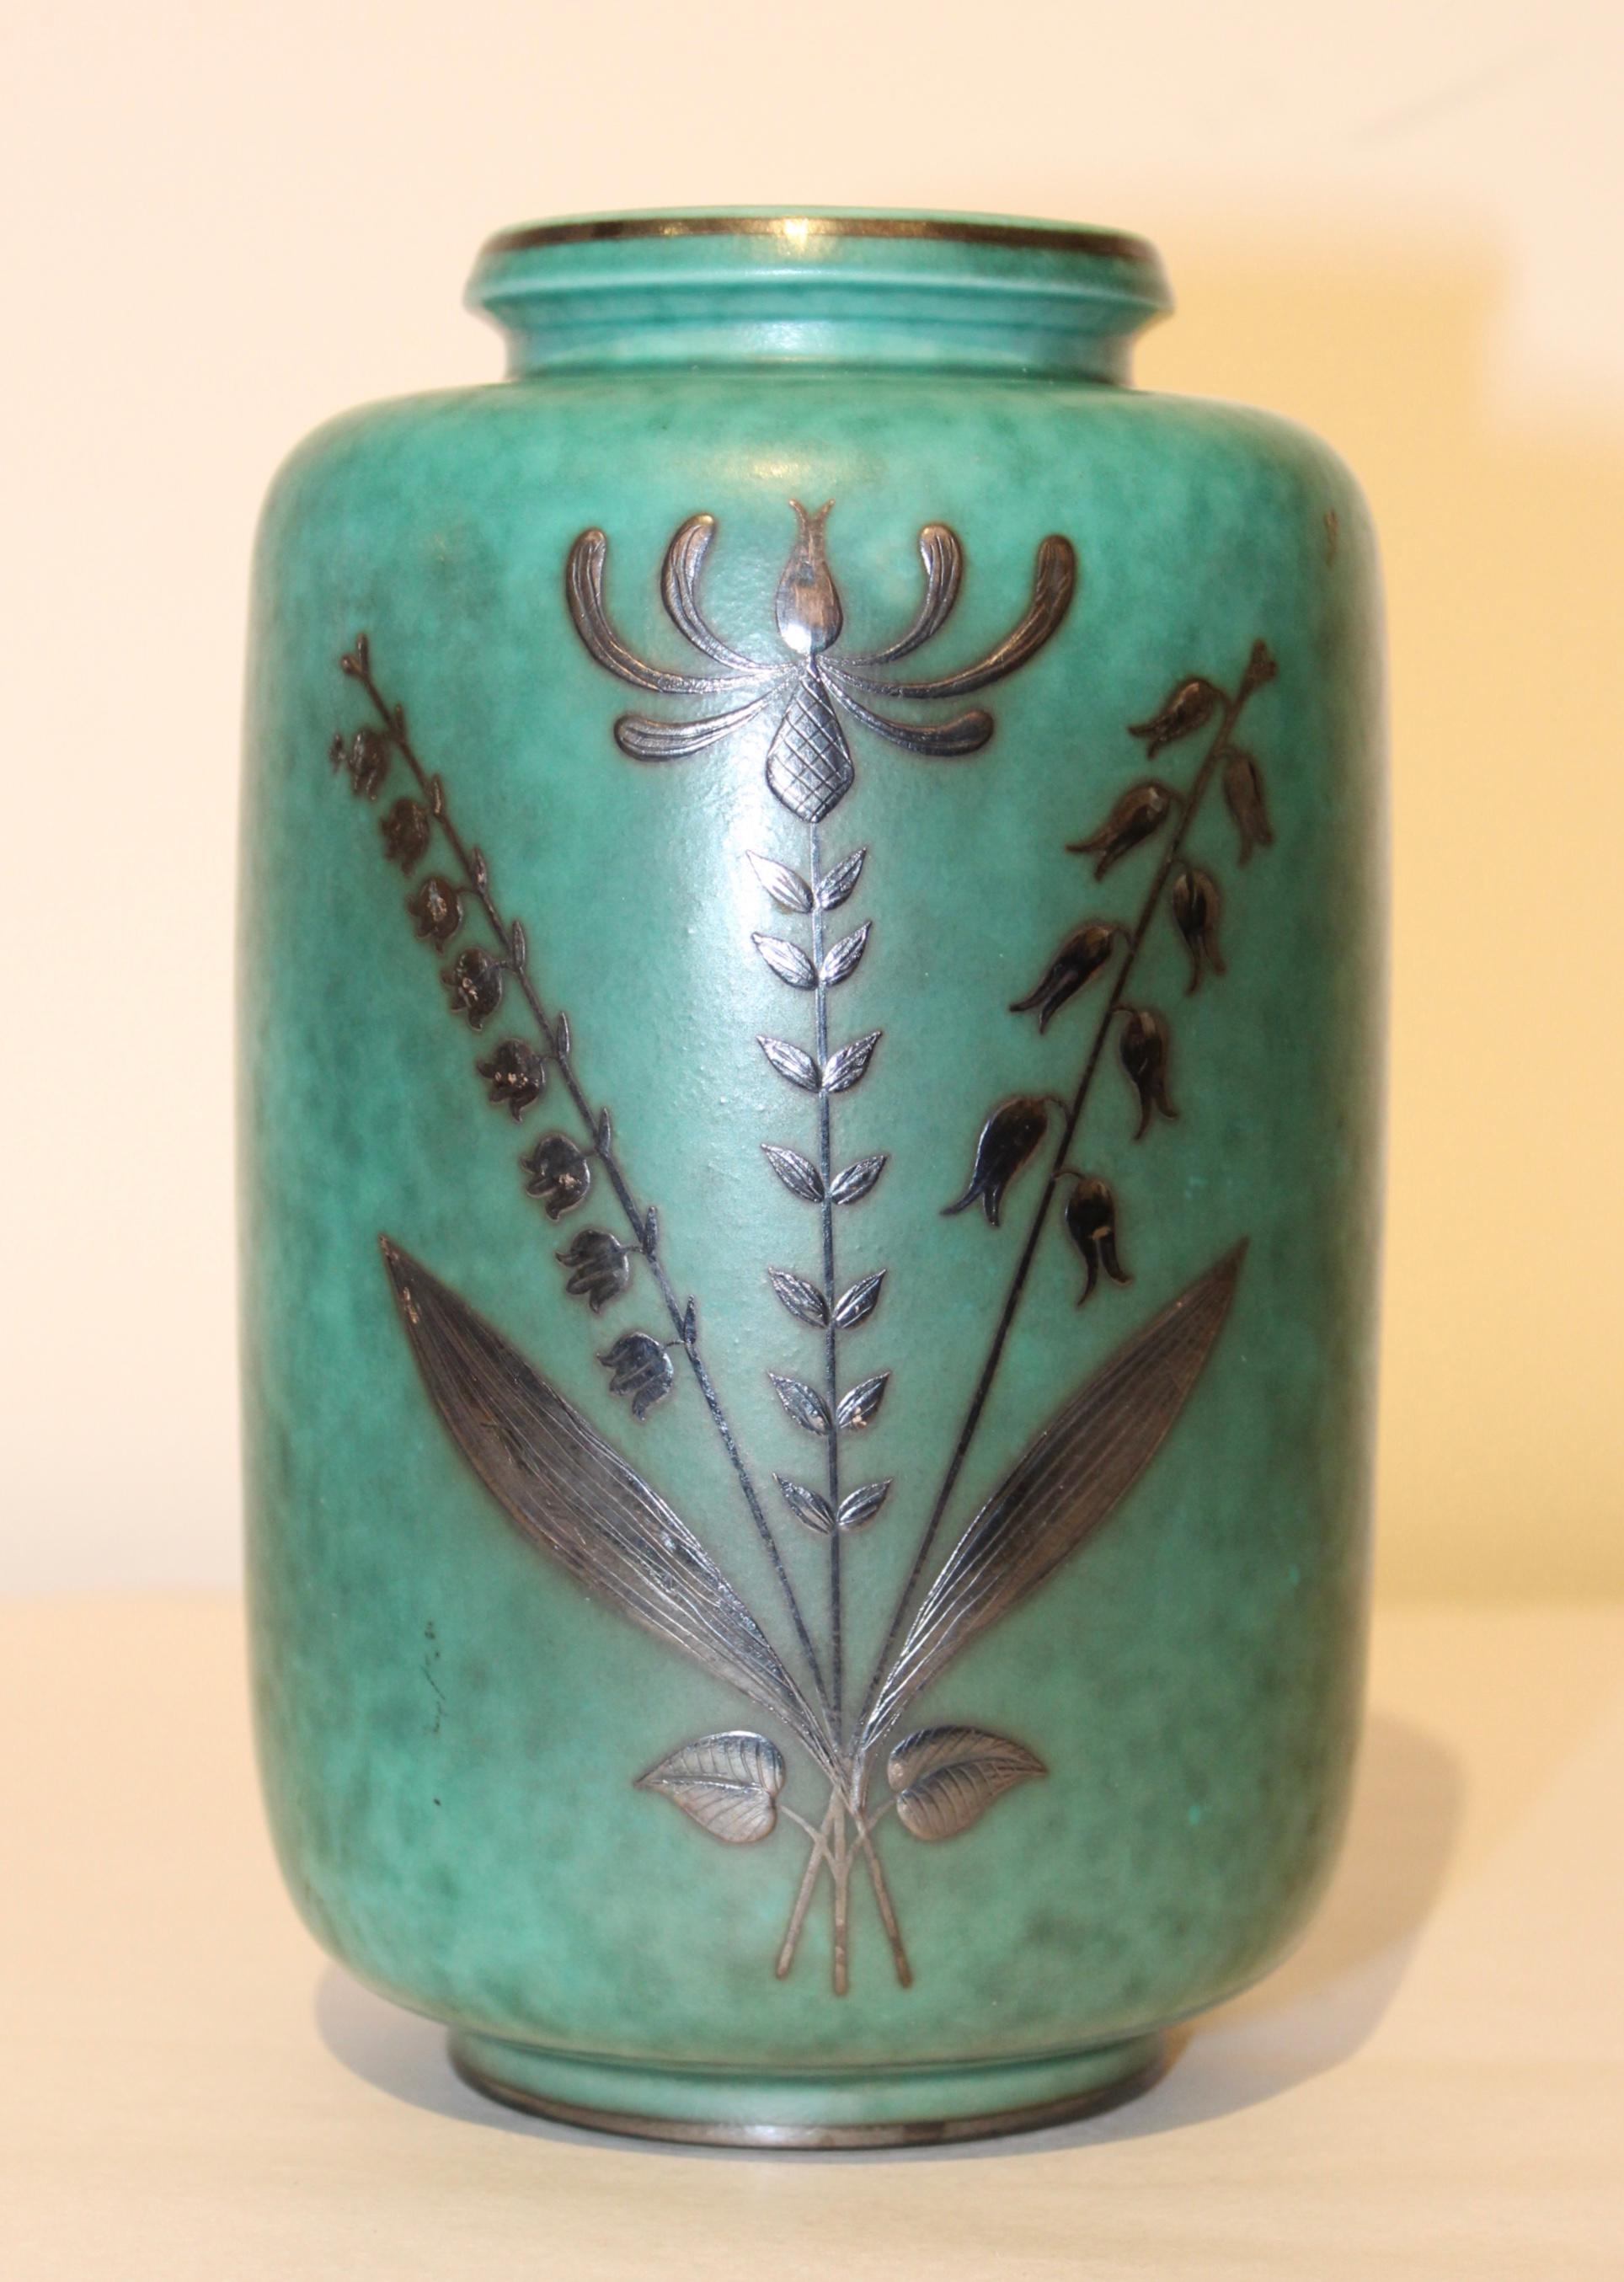 1940s Swedish Art Deco vase by Argenta.